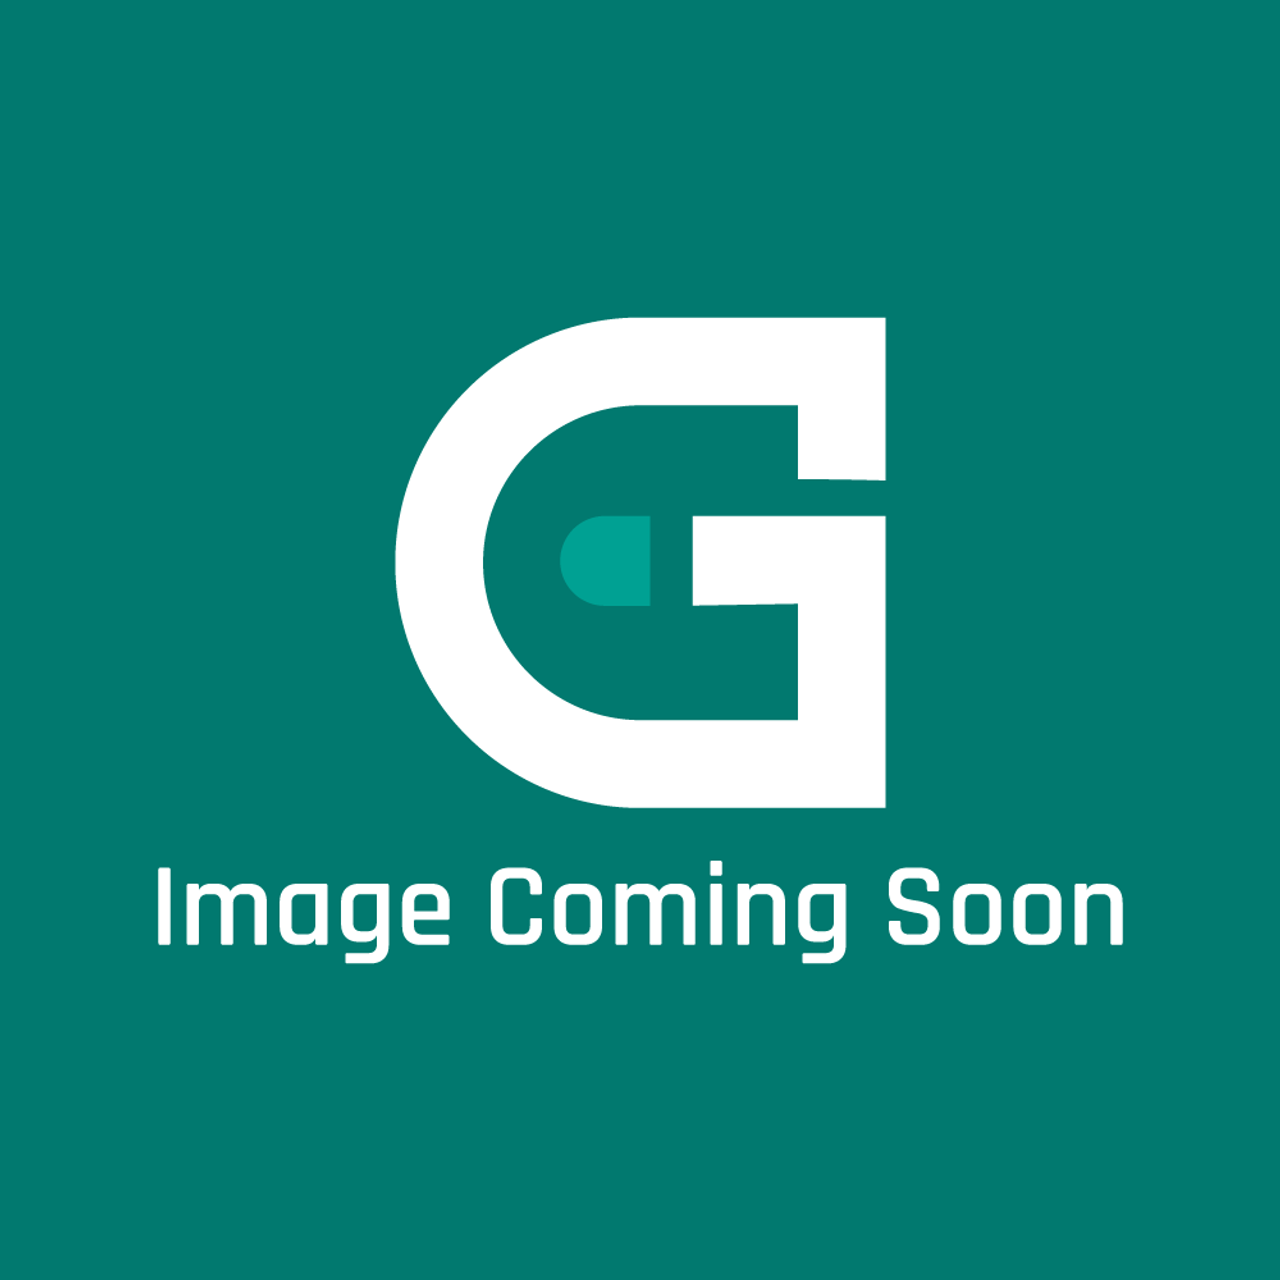 Star Mfg G5-860010 - Manifold Assy 860T - Image Coming Soon!